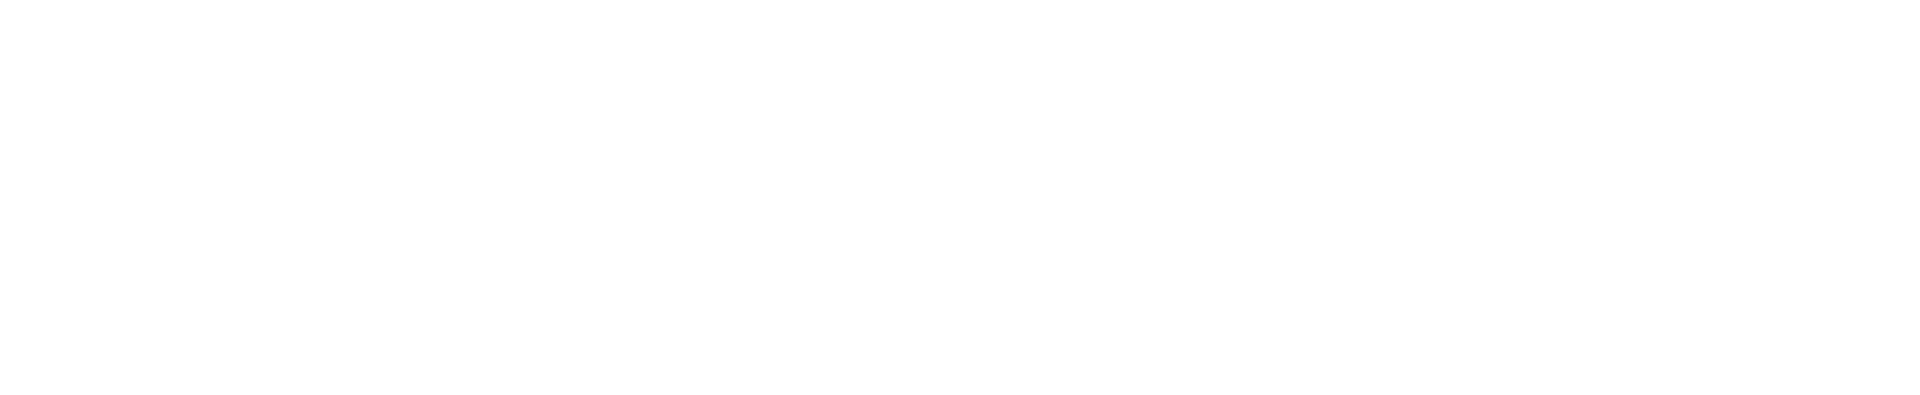 WAVES 2018 logo animated GIF